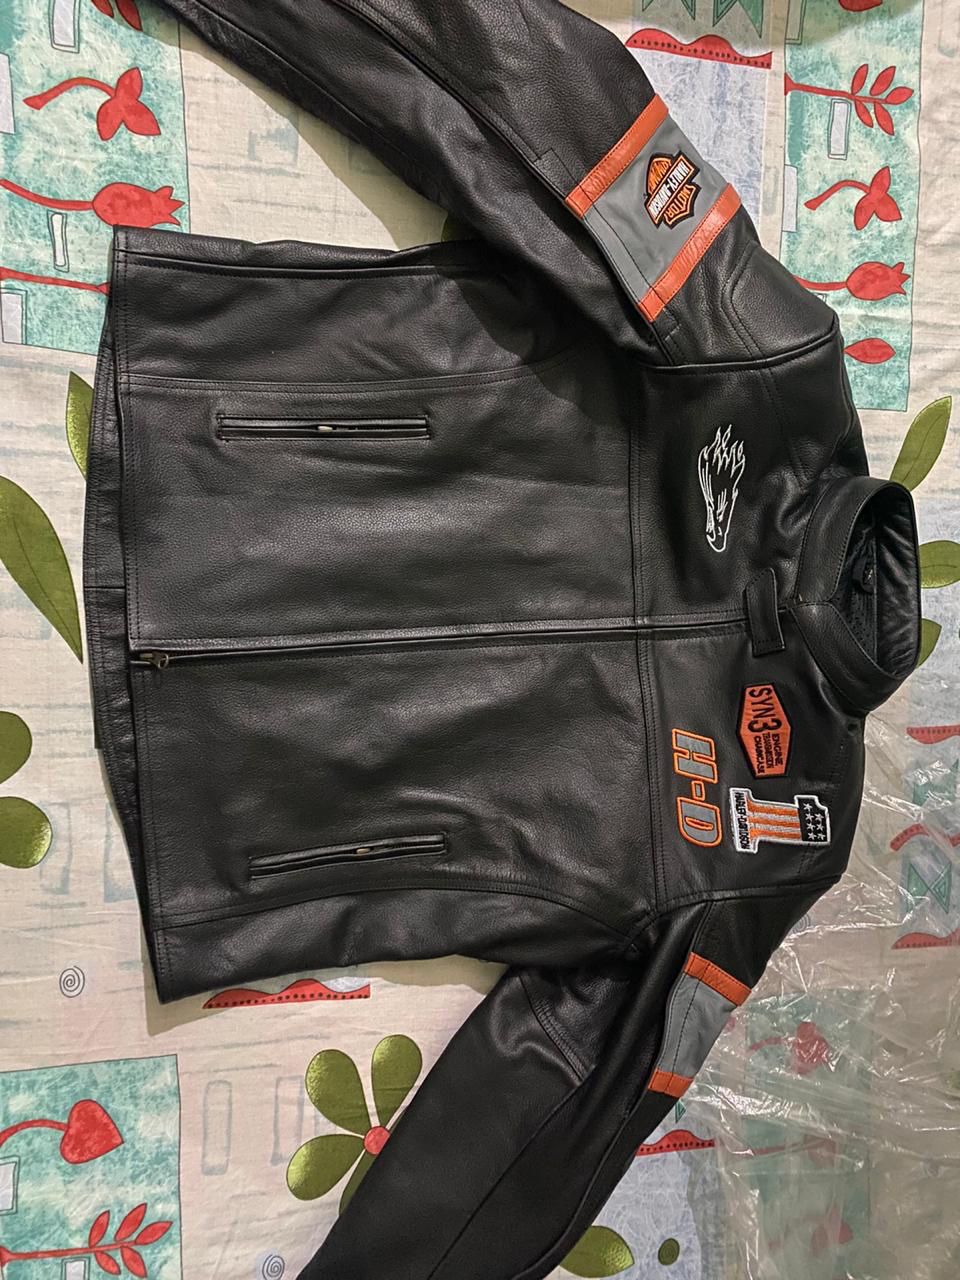 Harley Davidson motor bike jacket